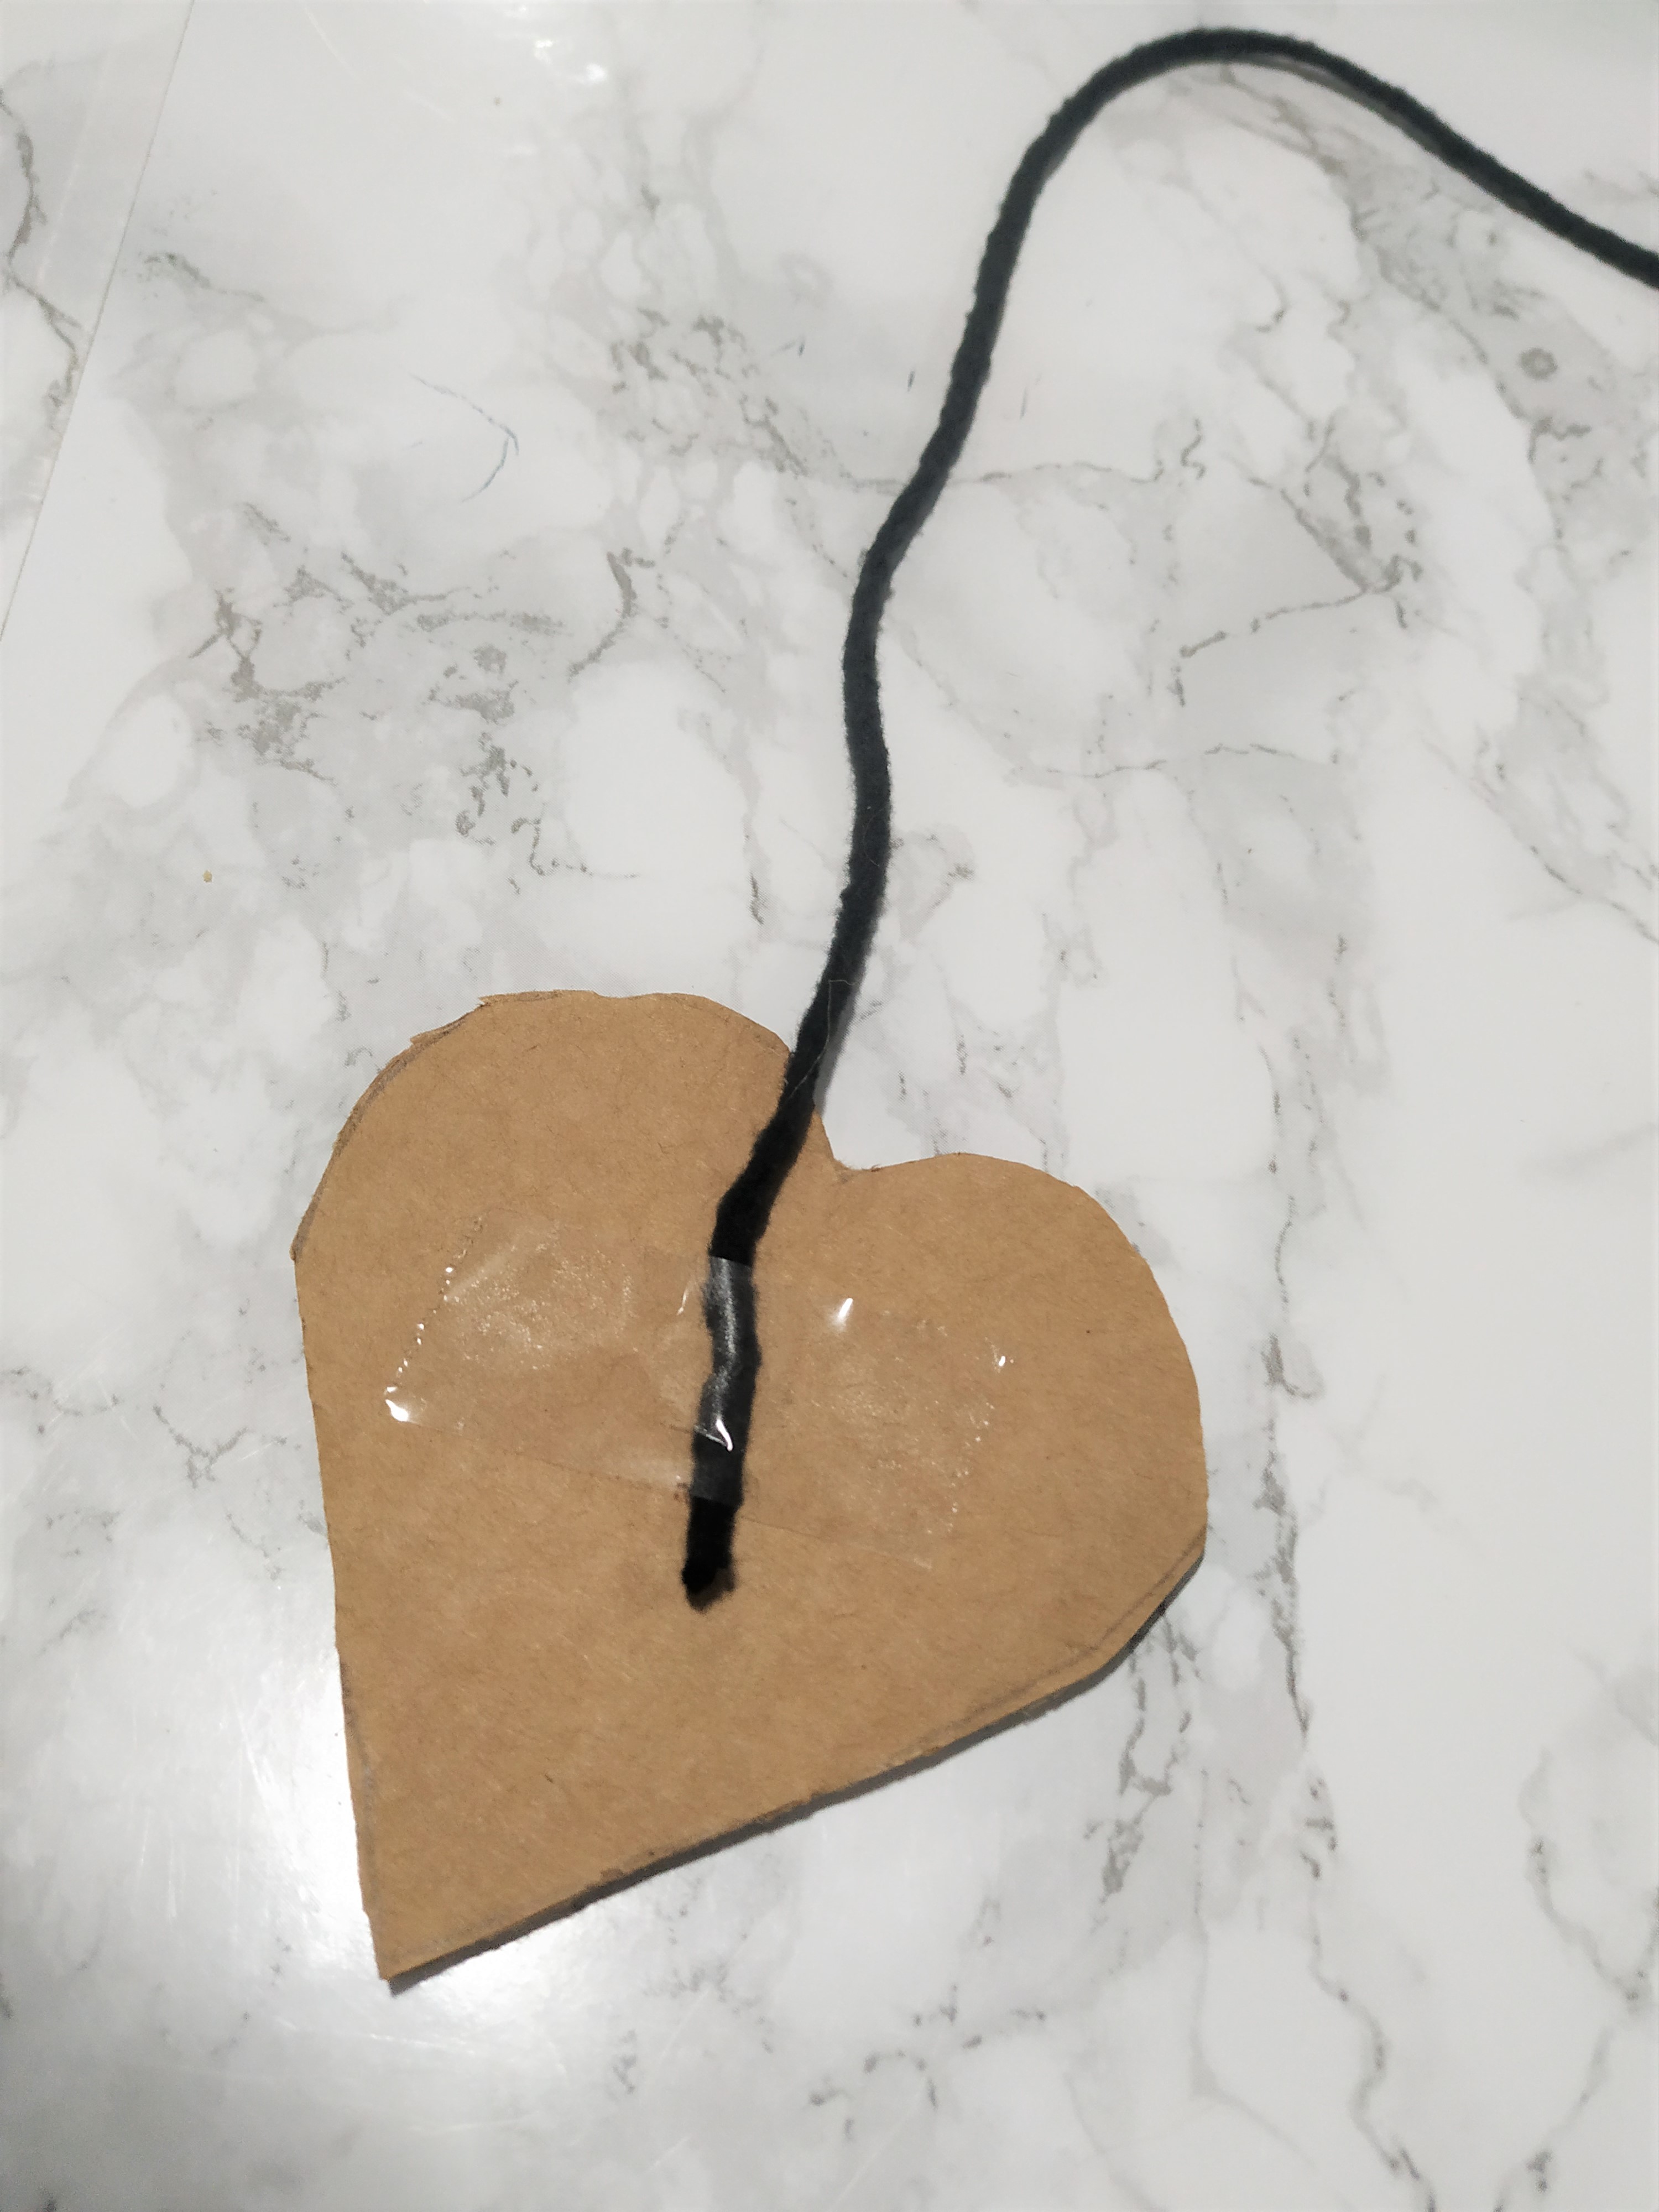 Taping a piece yarn onto a cardboard heart.